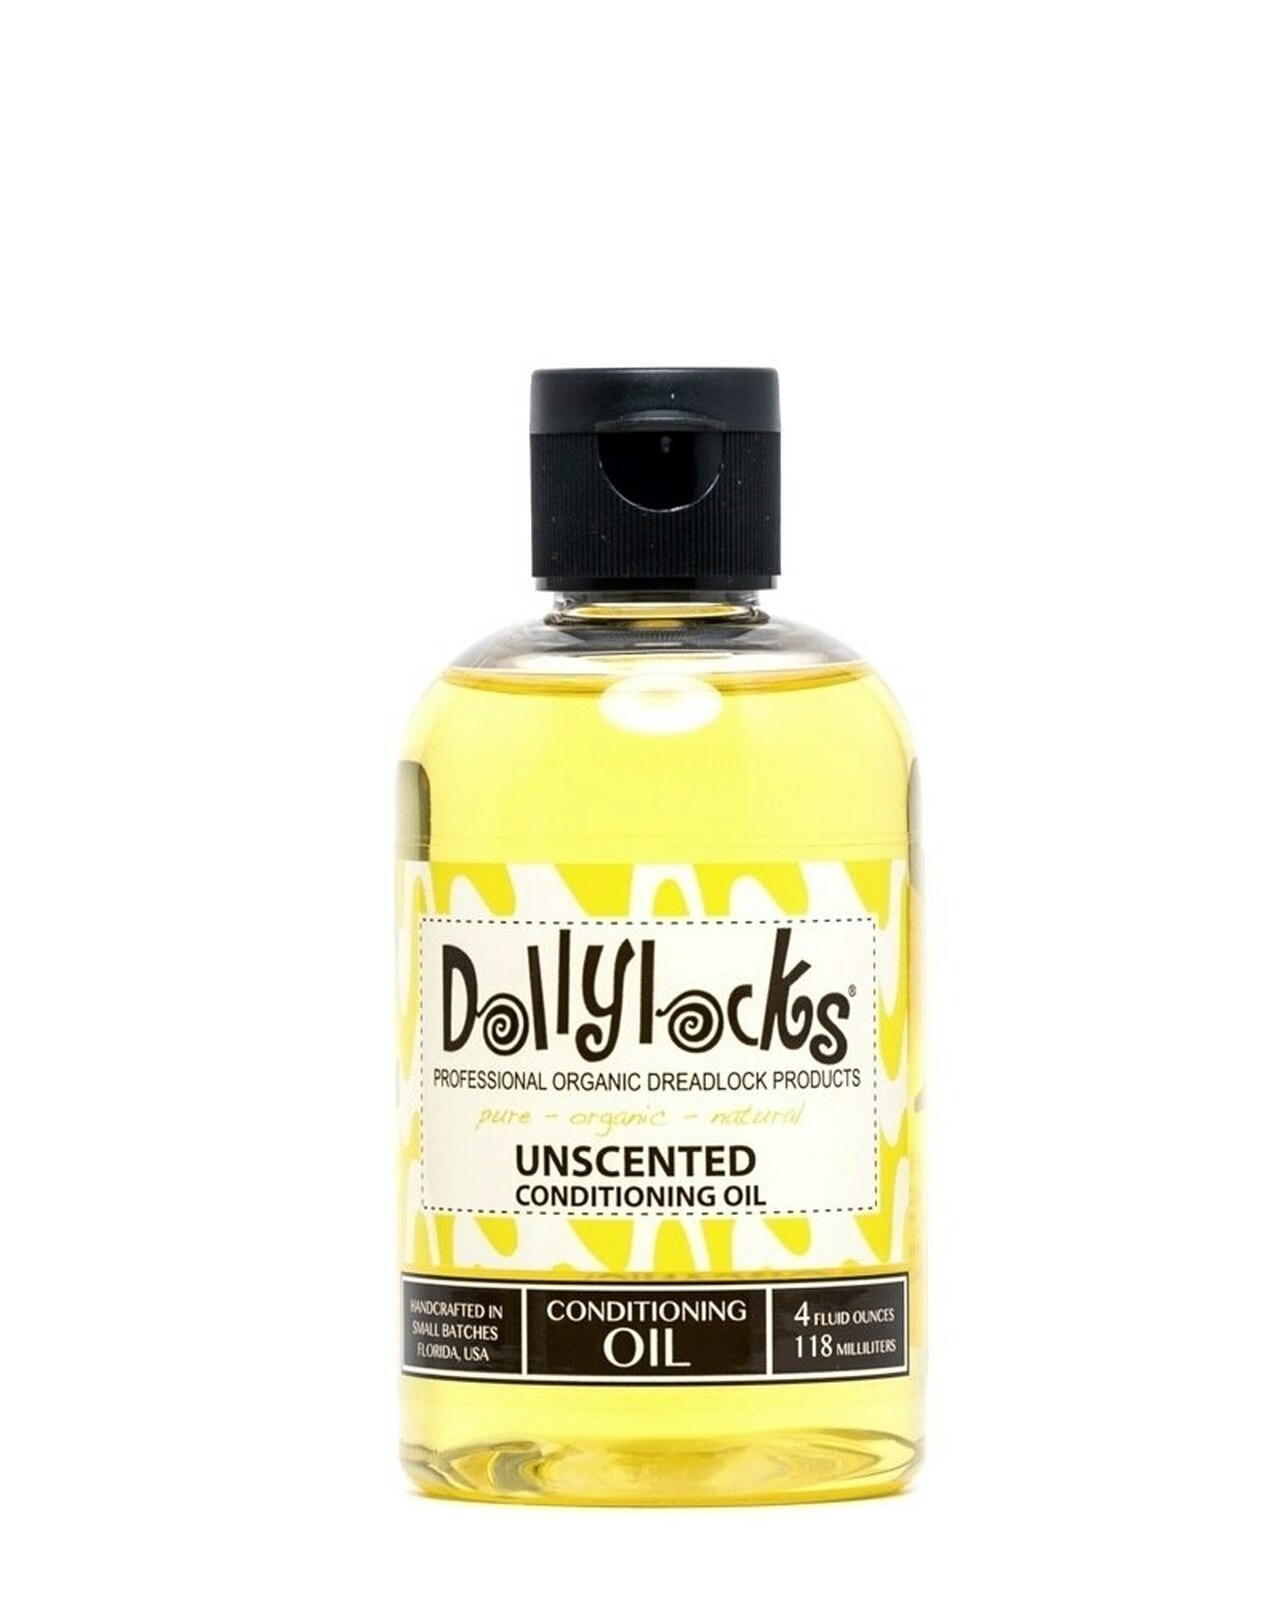 Dollylocks Conditioning oils